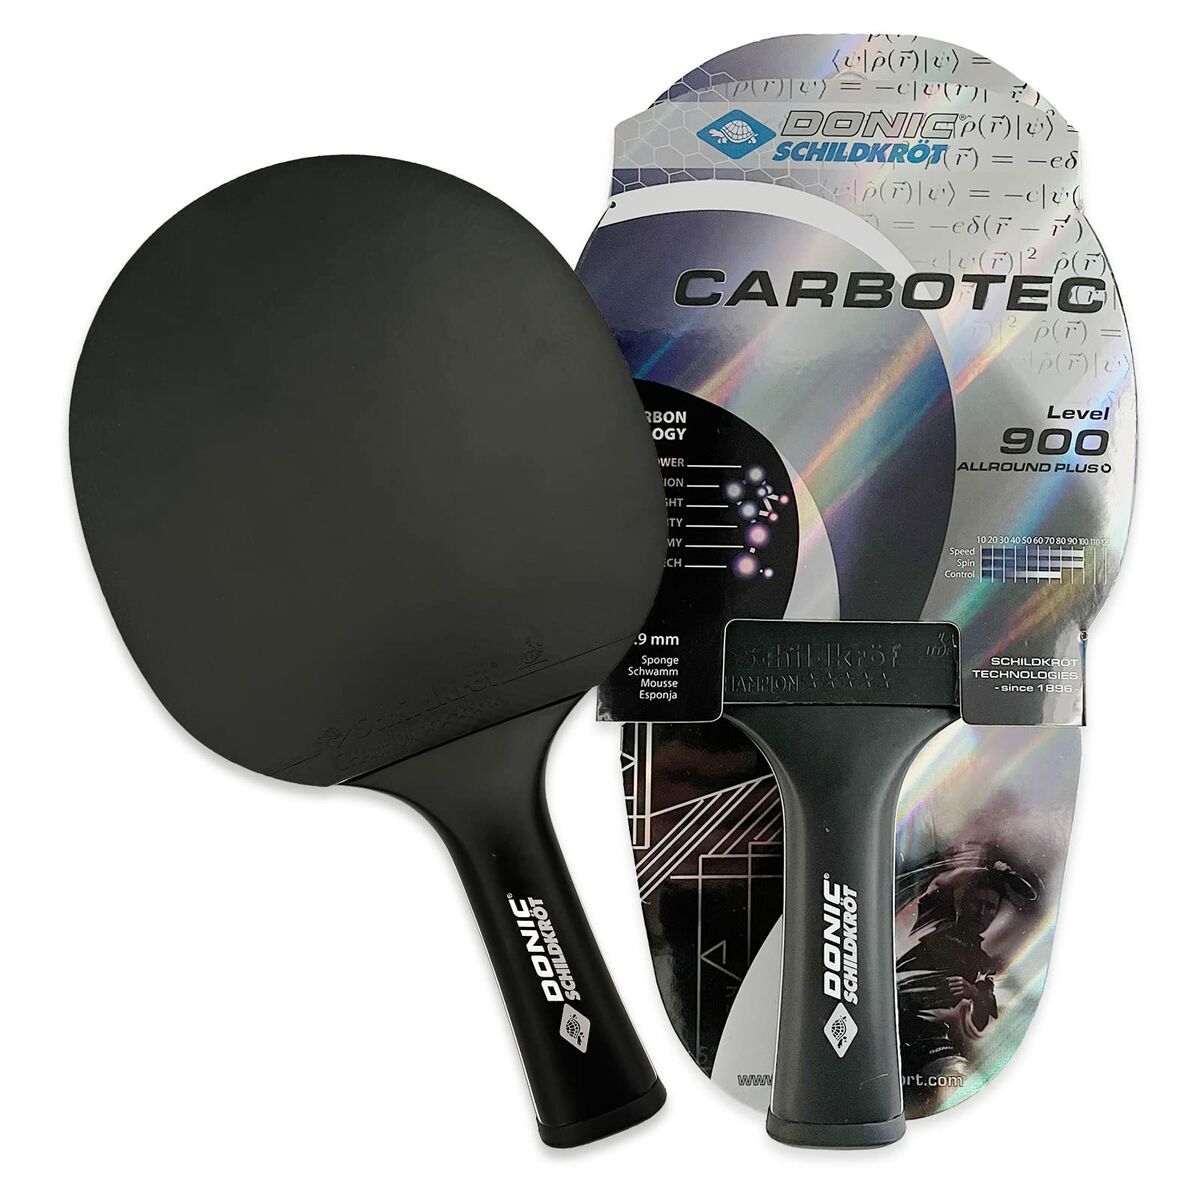 Racchetta da ping pong Donic CarboTec 900